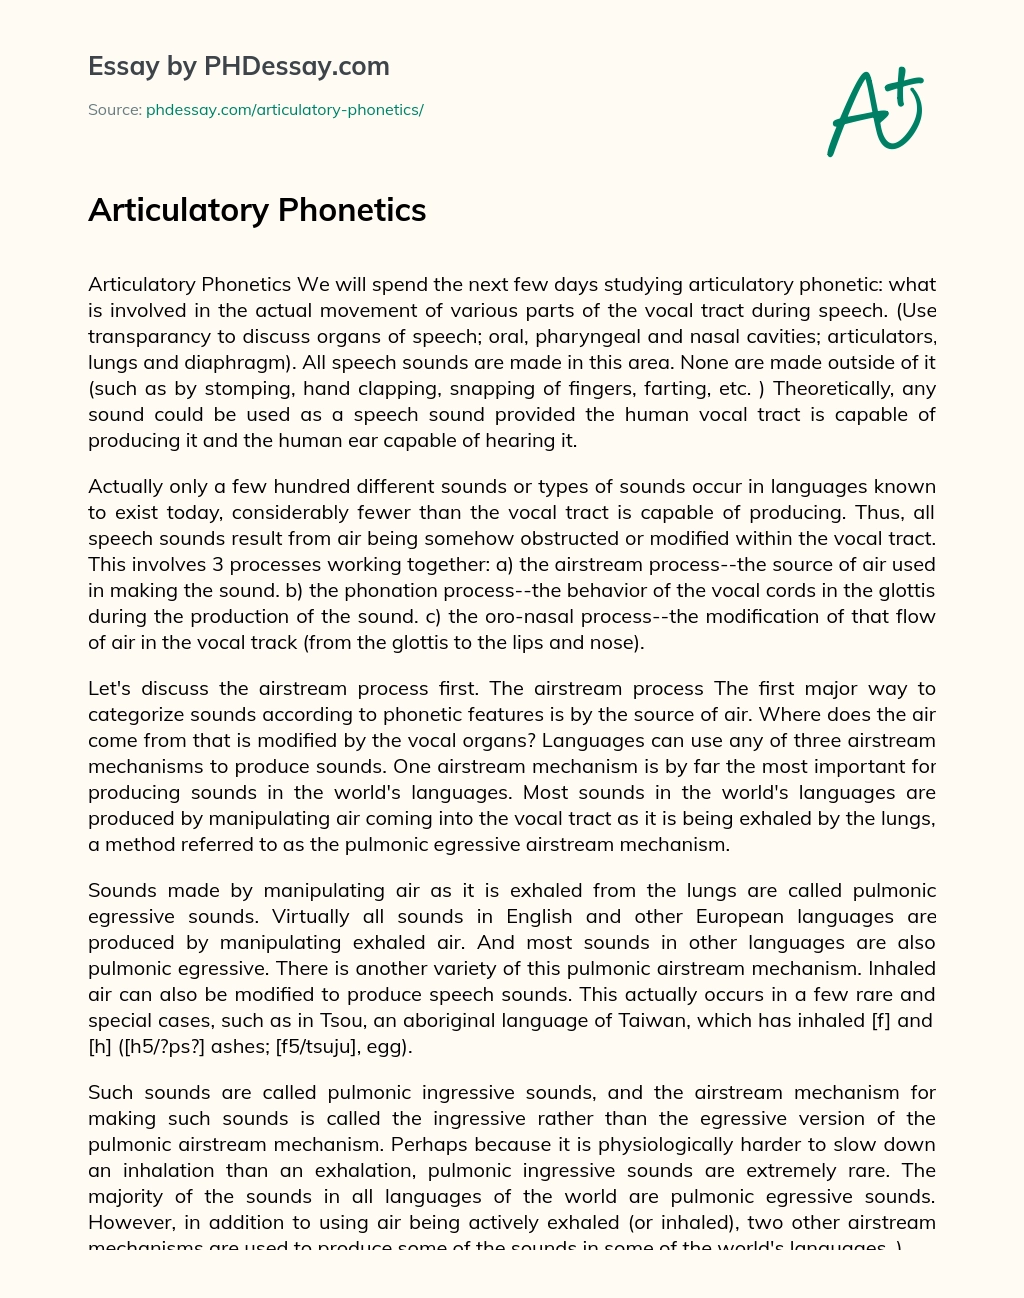 Articulatory Phonetics essay